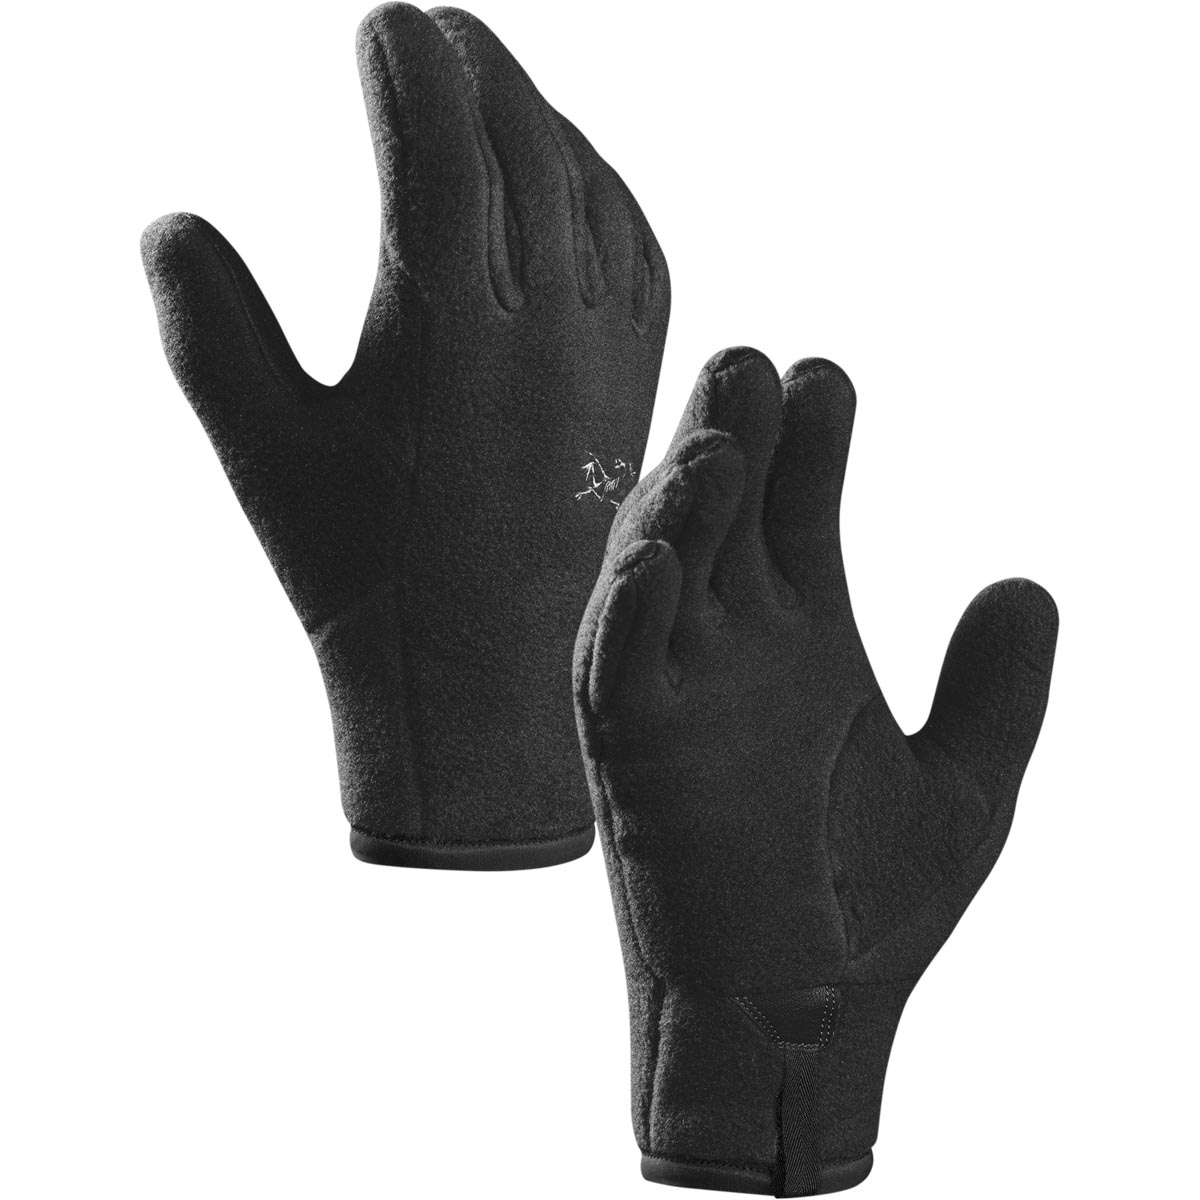 Arcteryx Men's Delta Glove